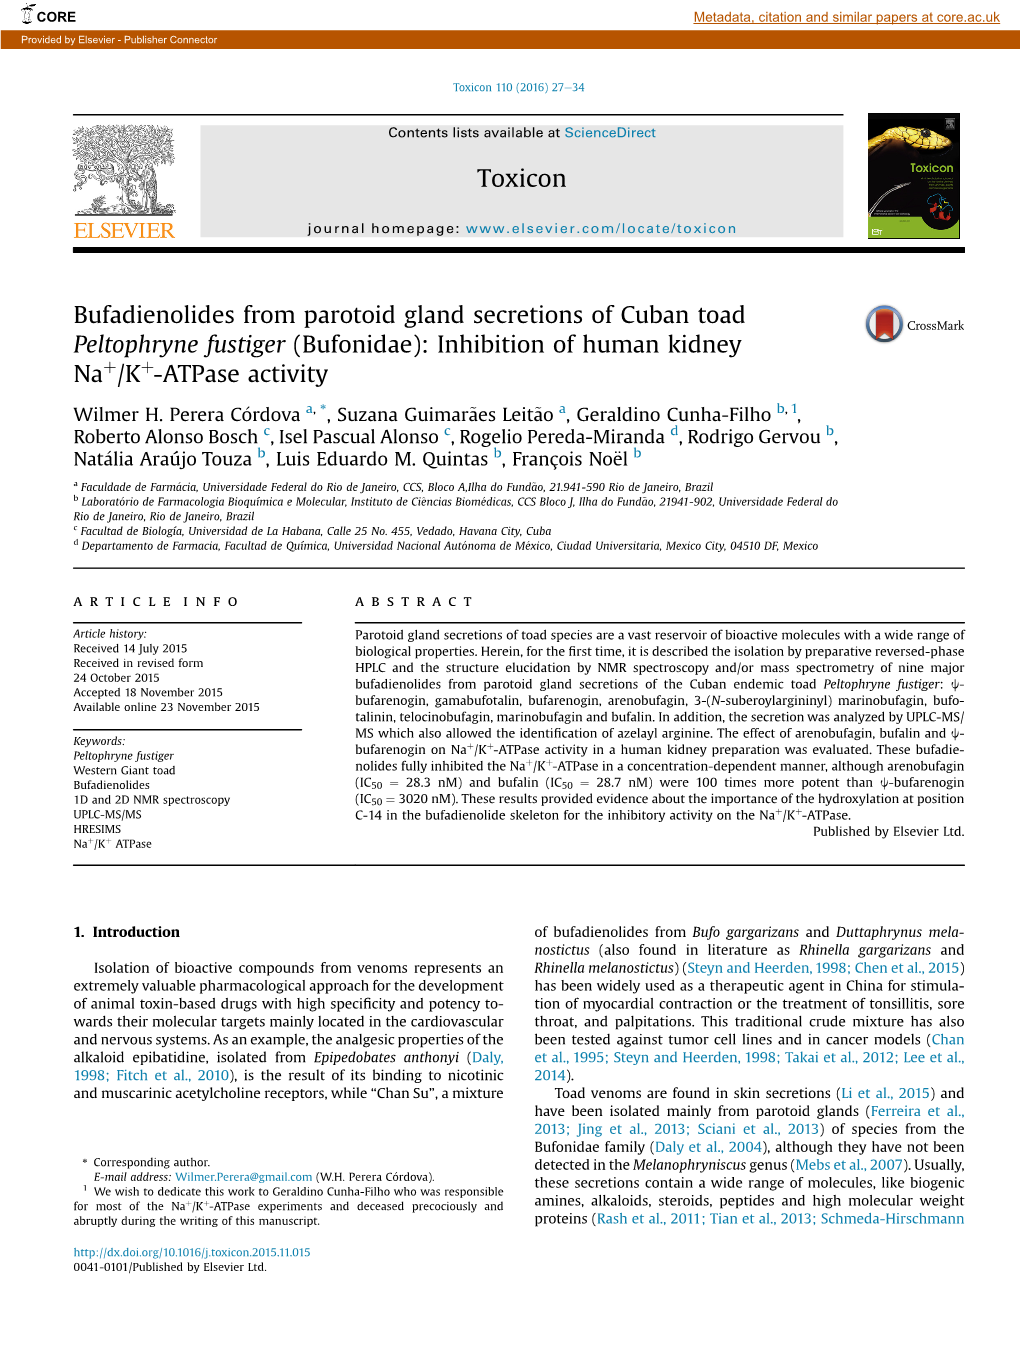 Bufadienolides from Parotoid Gland Secretions of Cuban Toad Peltophryne Fustiger (Bufonidae): Inhibition of Human Kidney Þ Þ Na /K -Atpase Activity